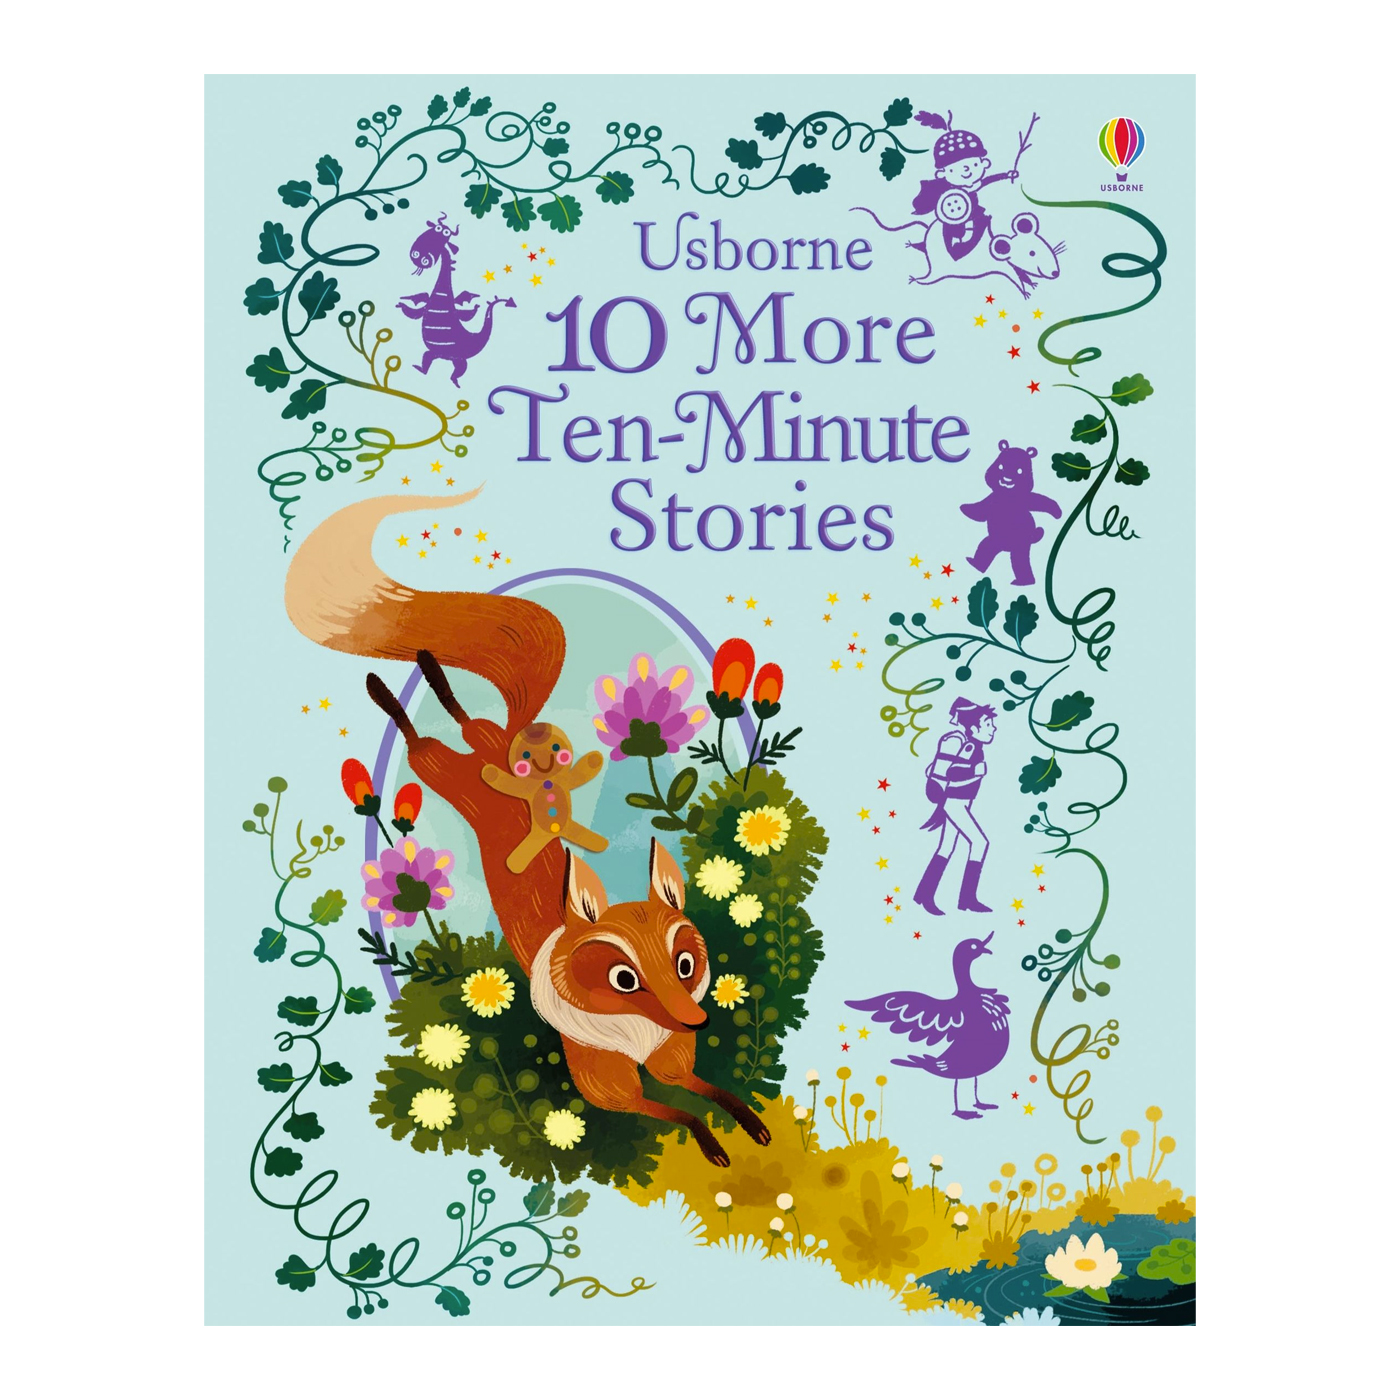 USBORNE 10 More Ten-Minute Stories